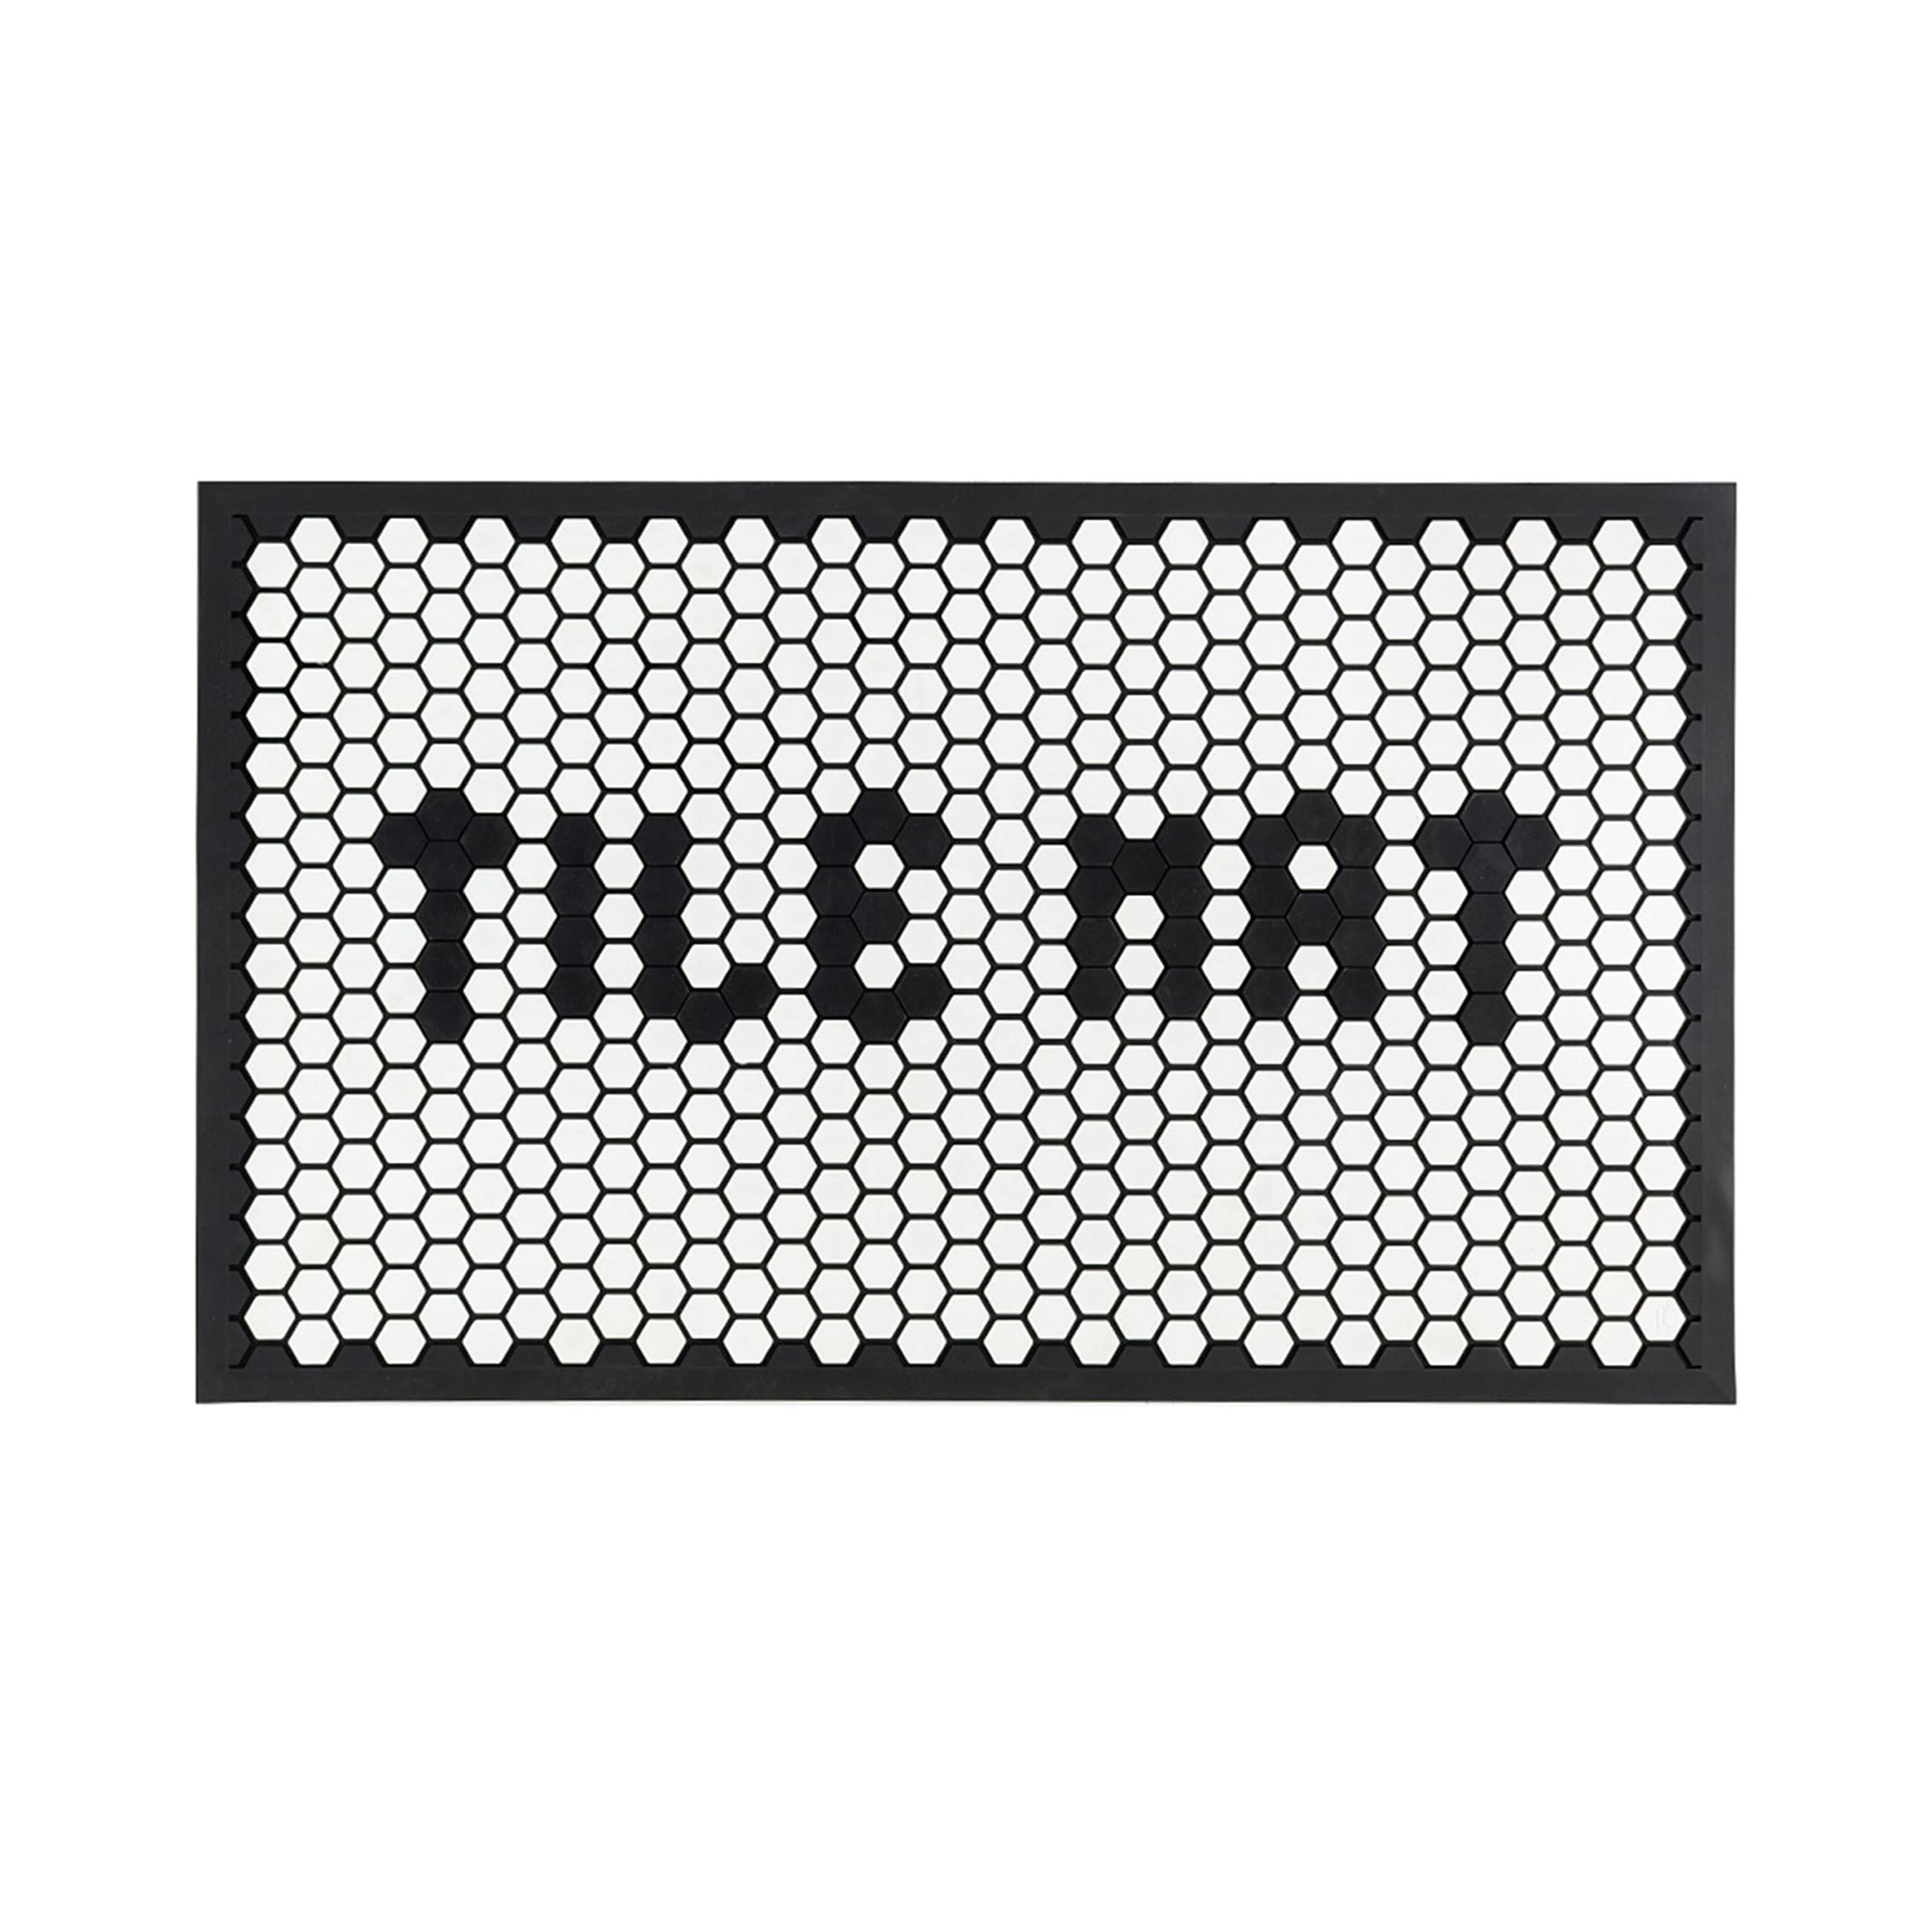 Letterfolk Customizable Doormat - Standard All Weather Non-Slip Rubber Doormat 18x30 - White | Amazon (US)